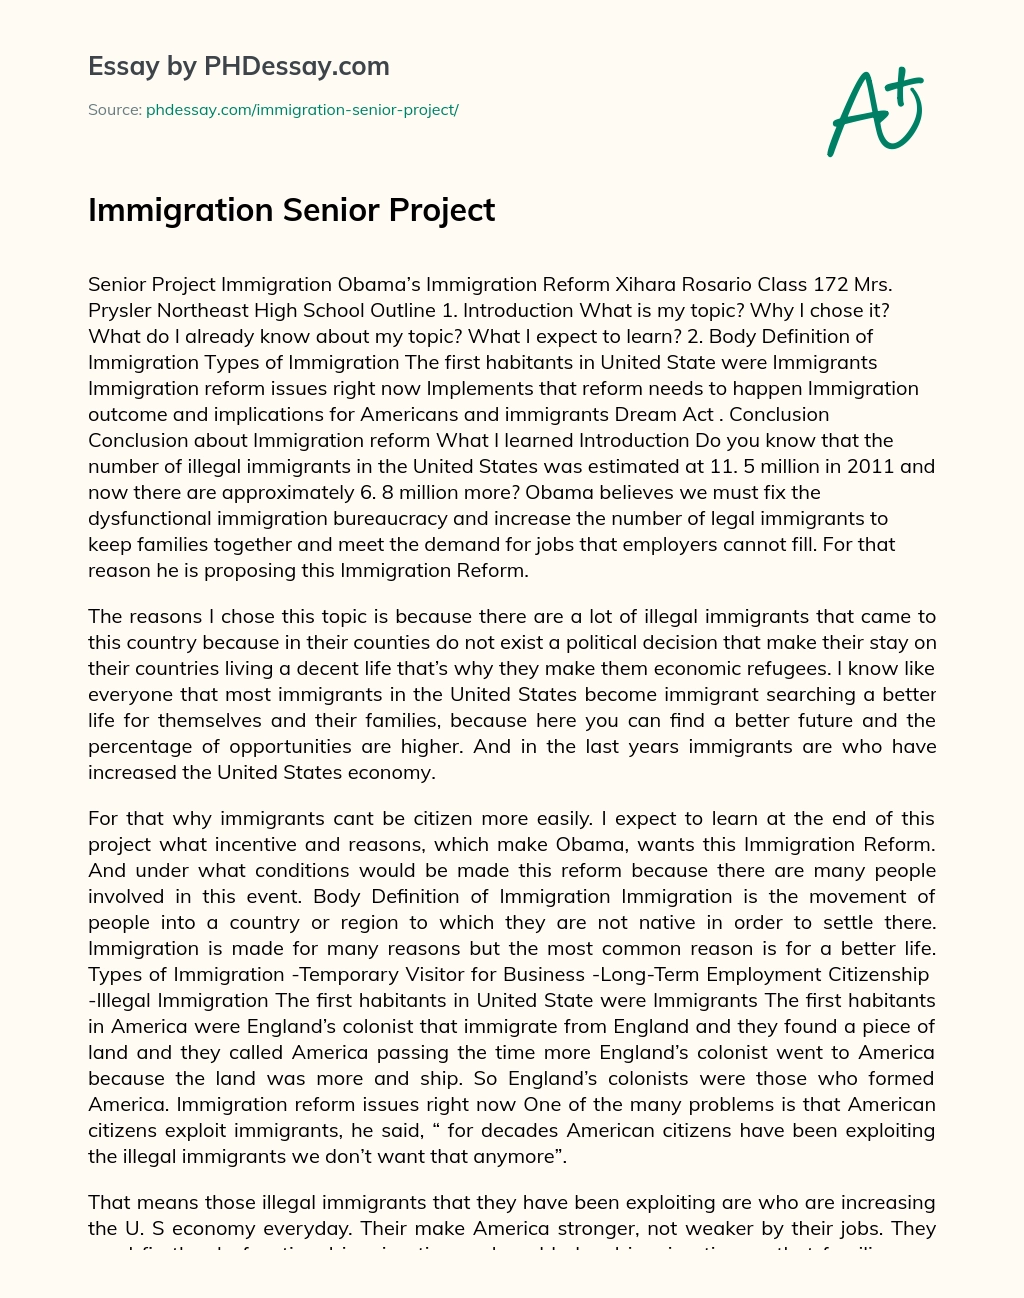 Immigration Senior Project essay